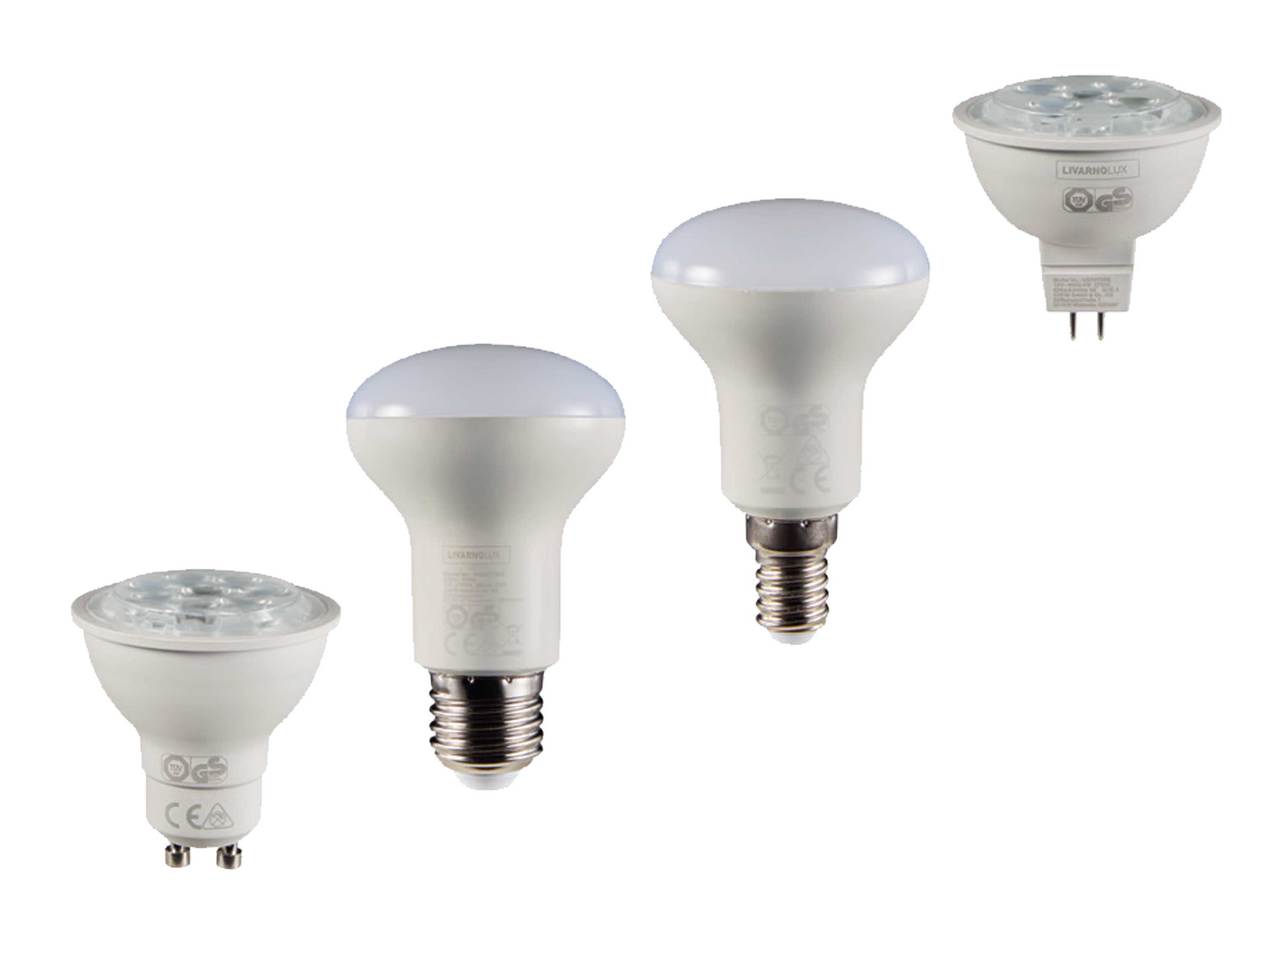 LIVARNO LUX LED Reflector Light Bulb